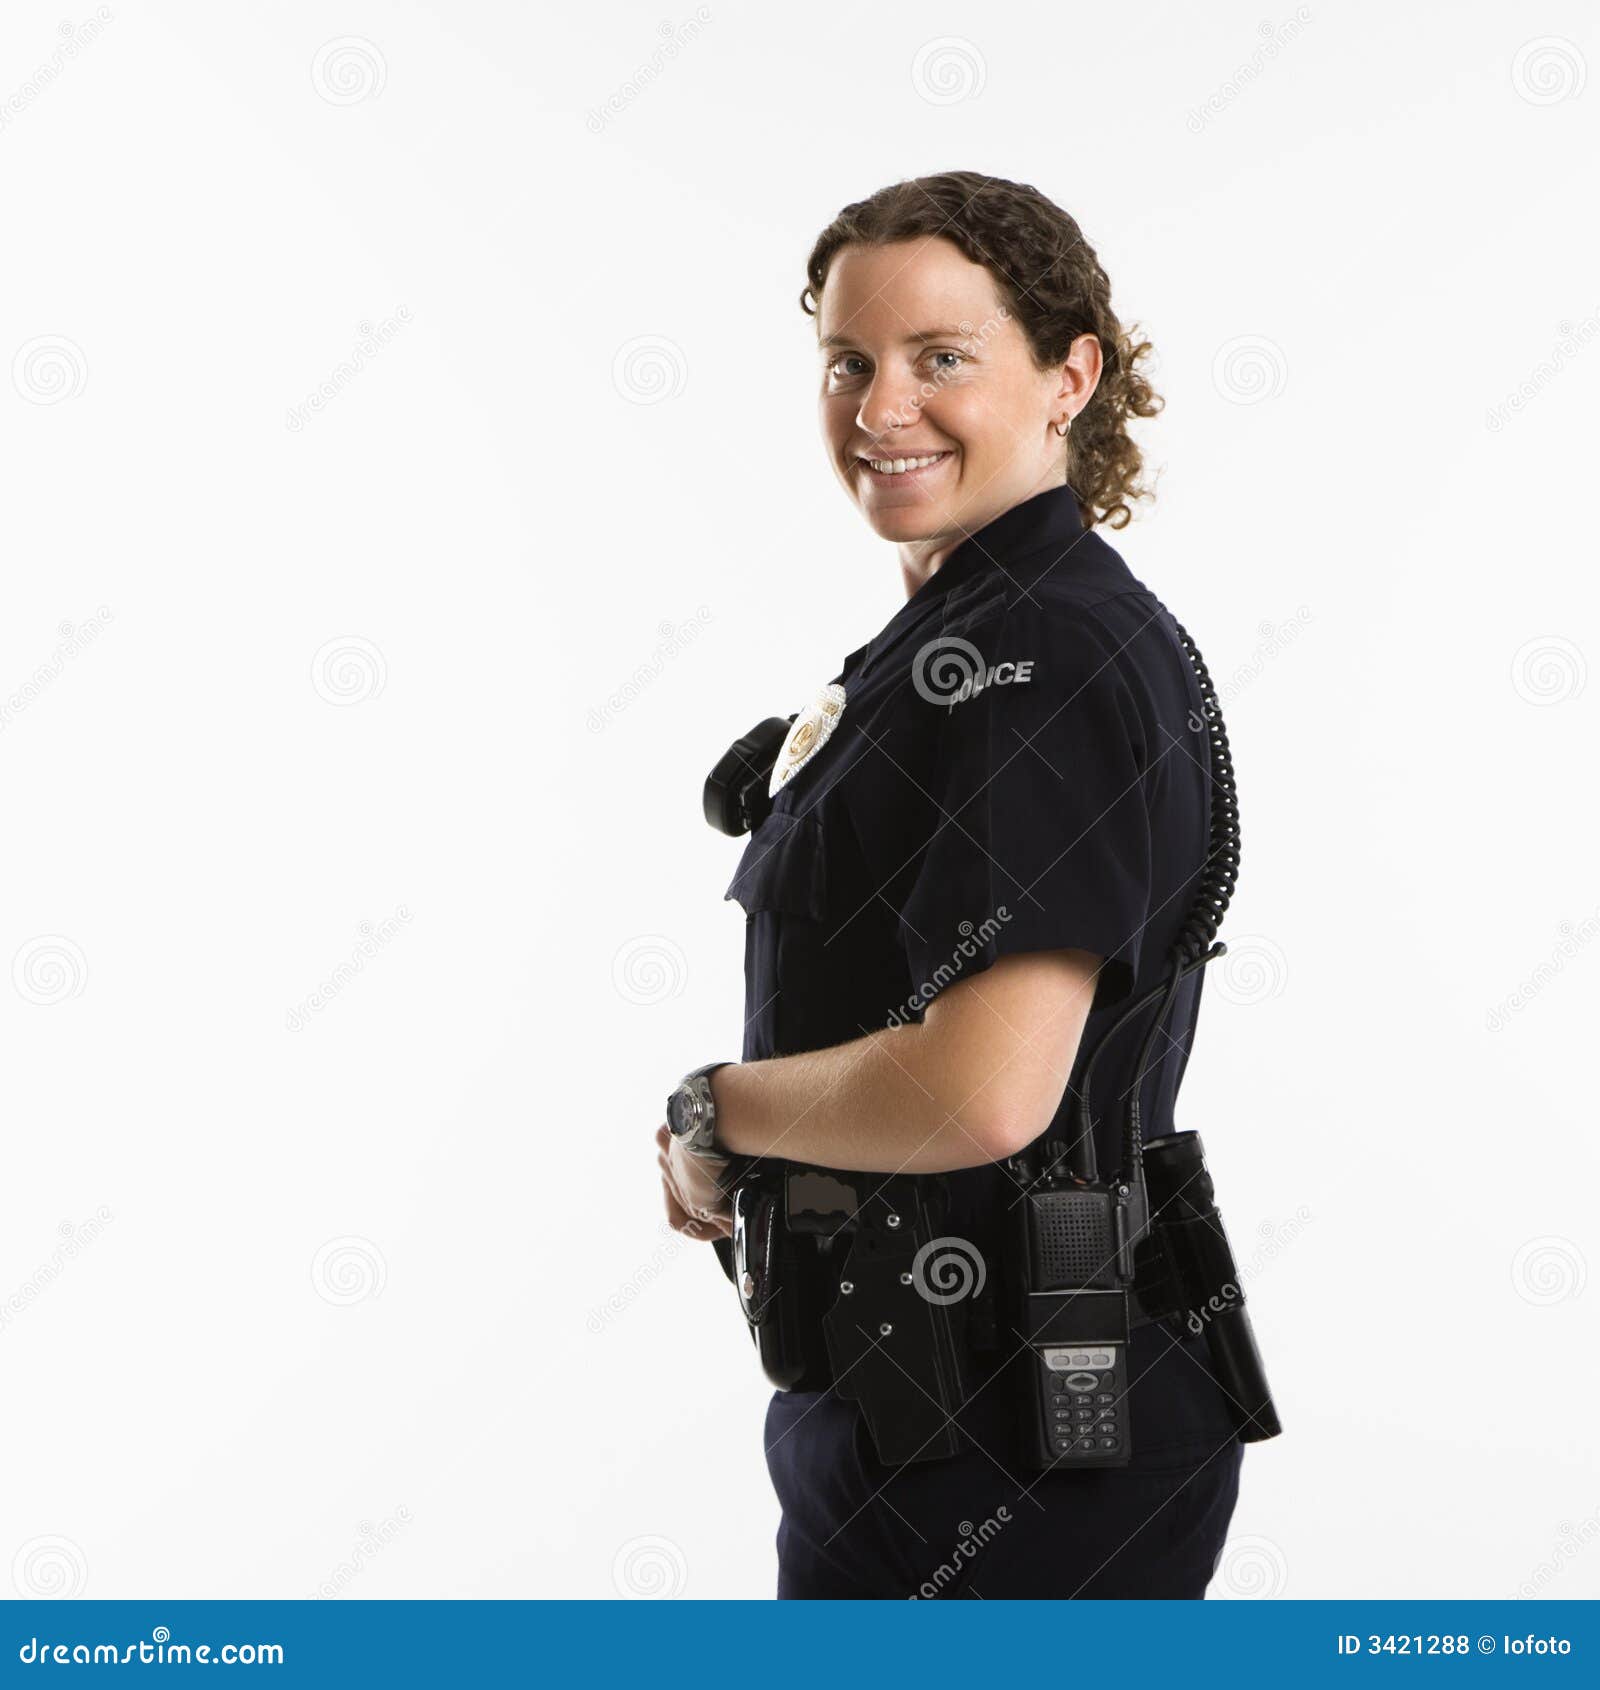 smiling policewoman.